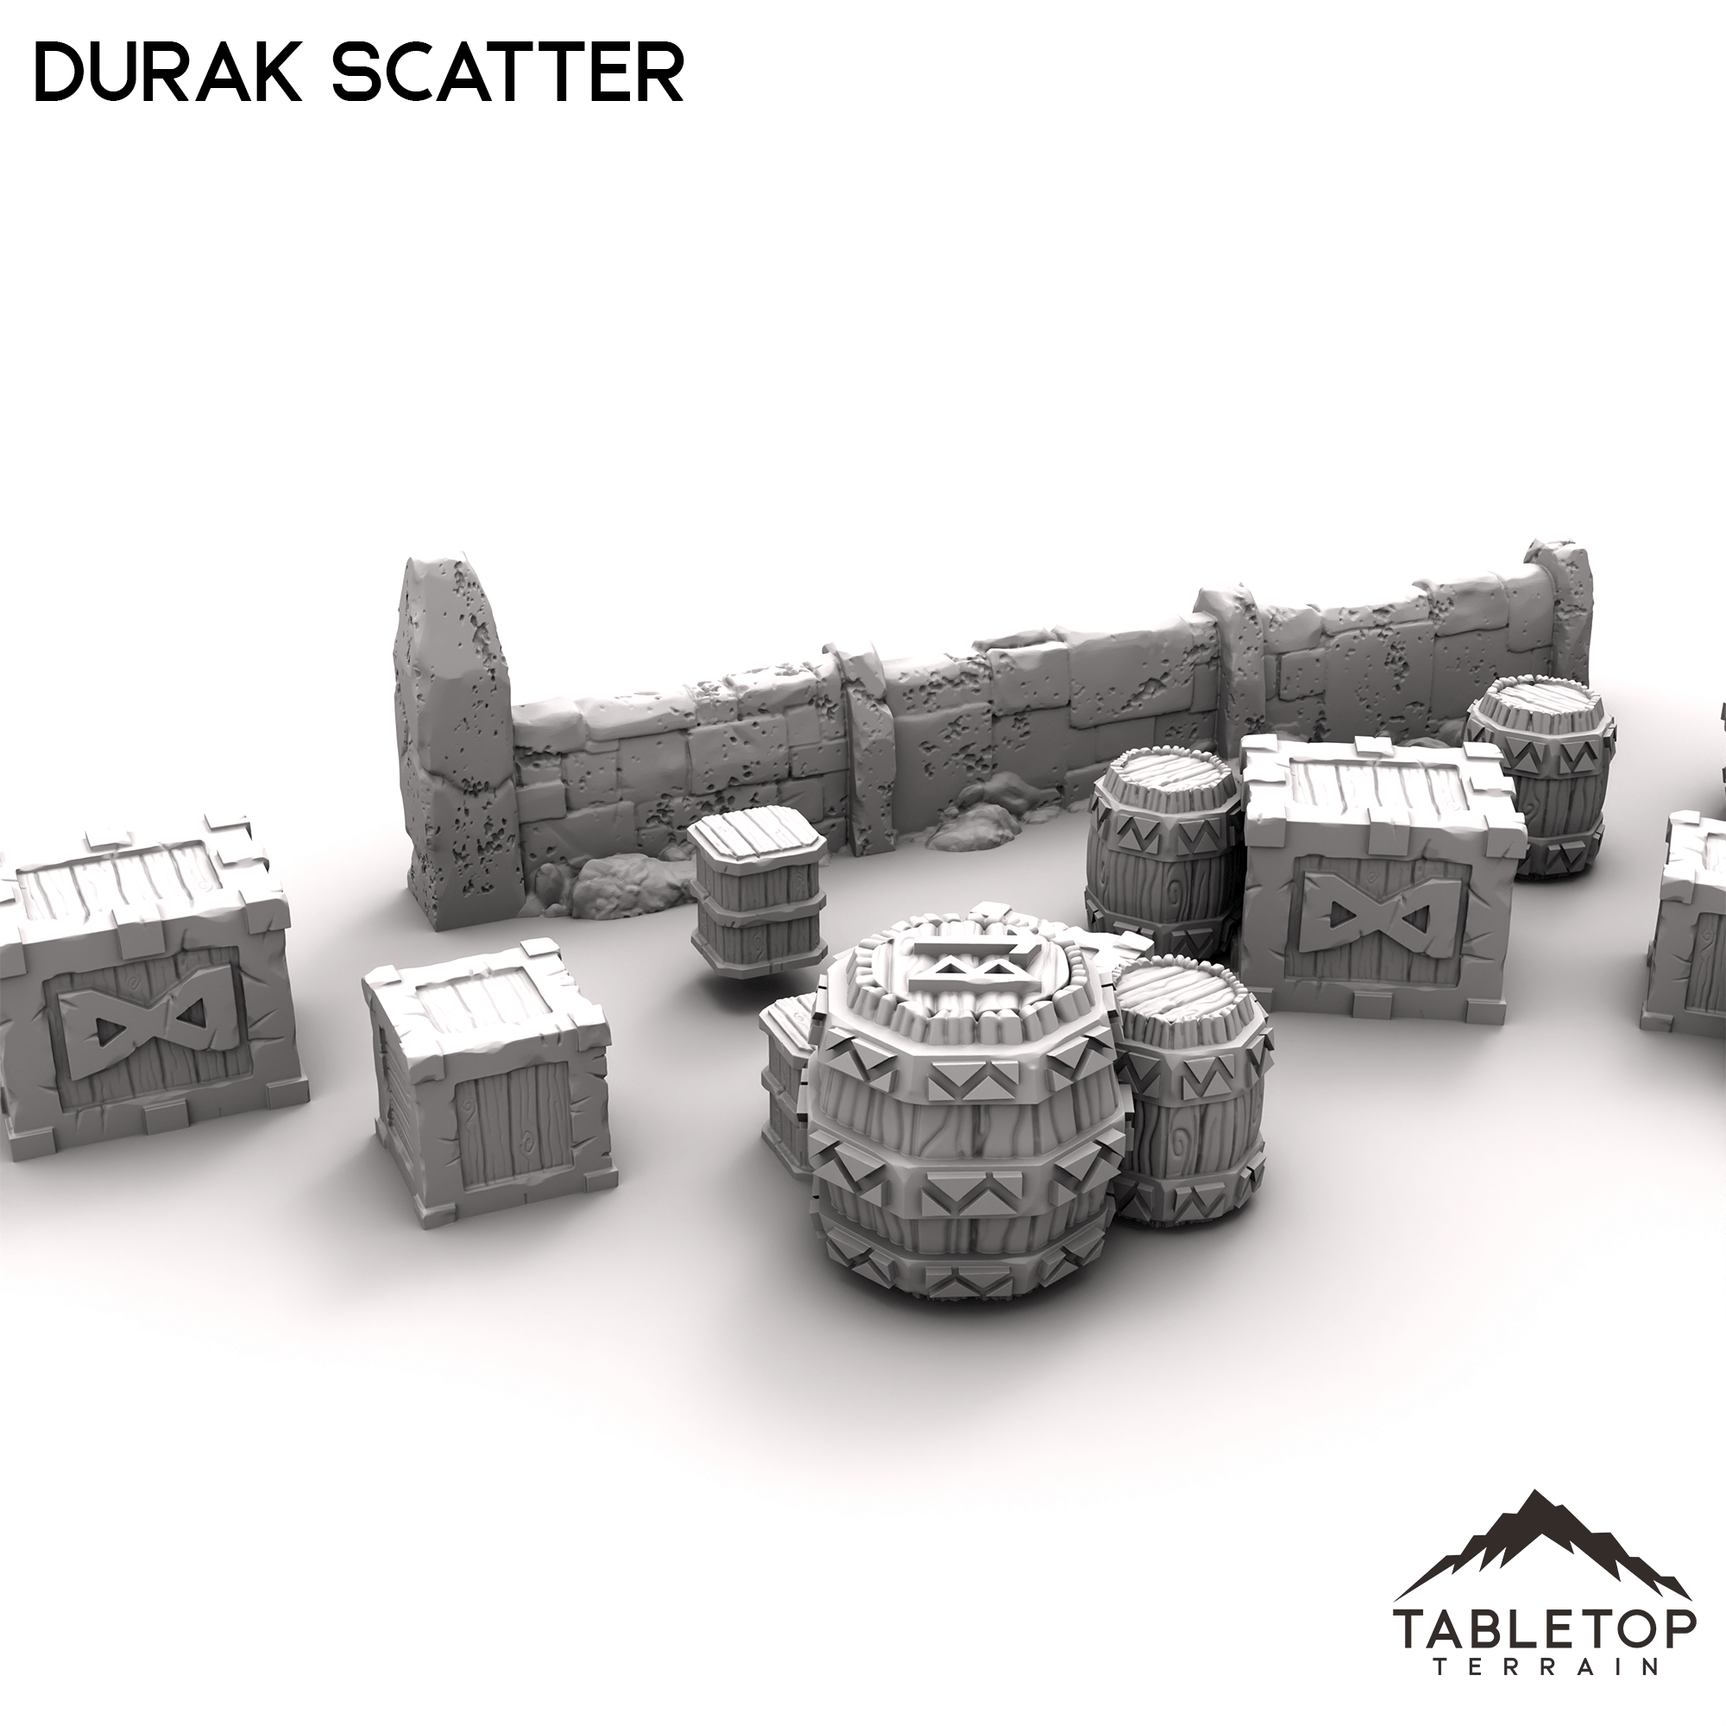 Scatter - Kingdom of Durak Deep